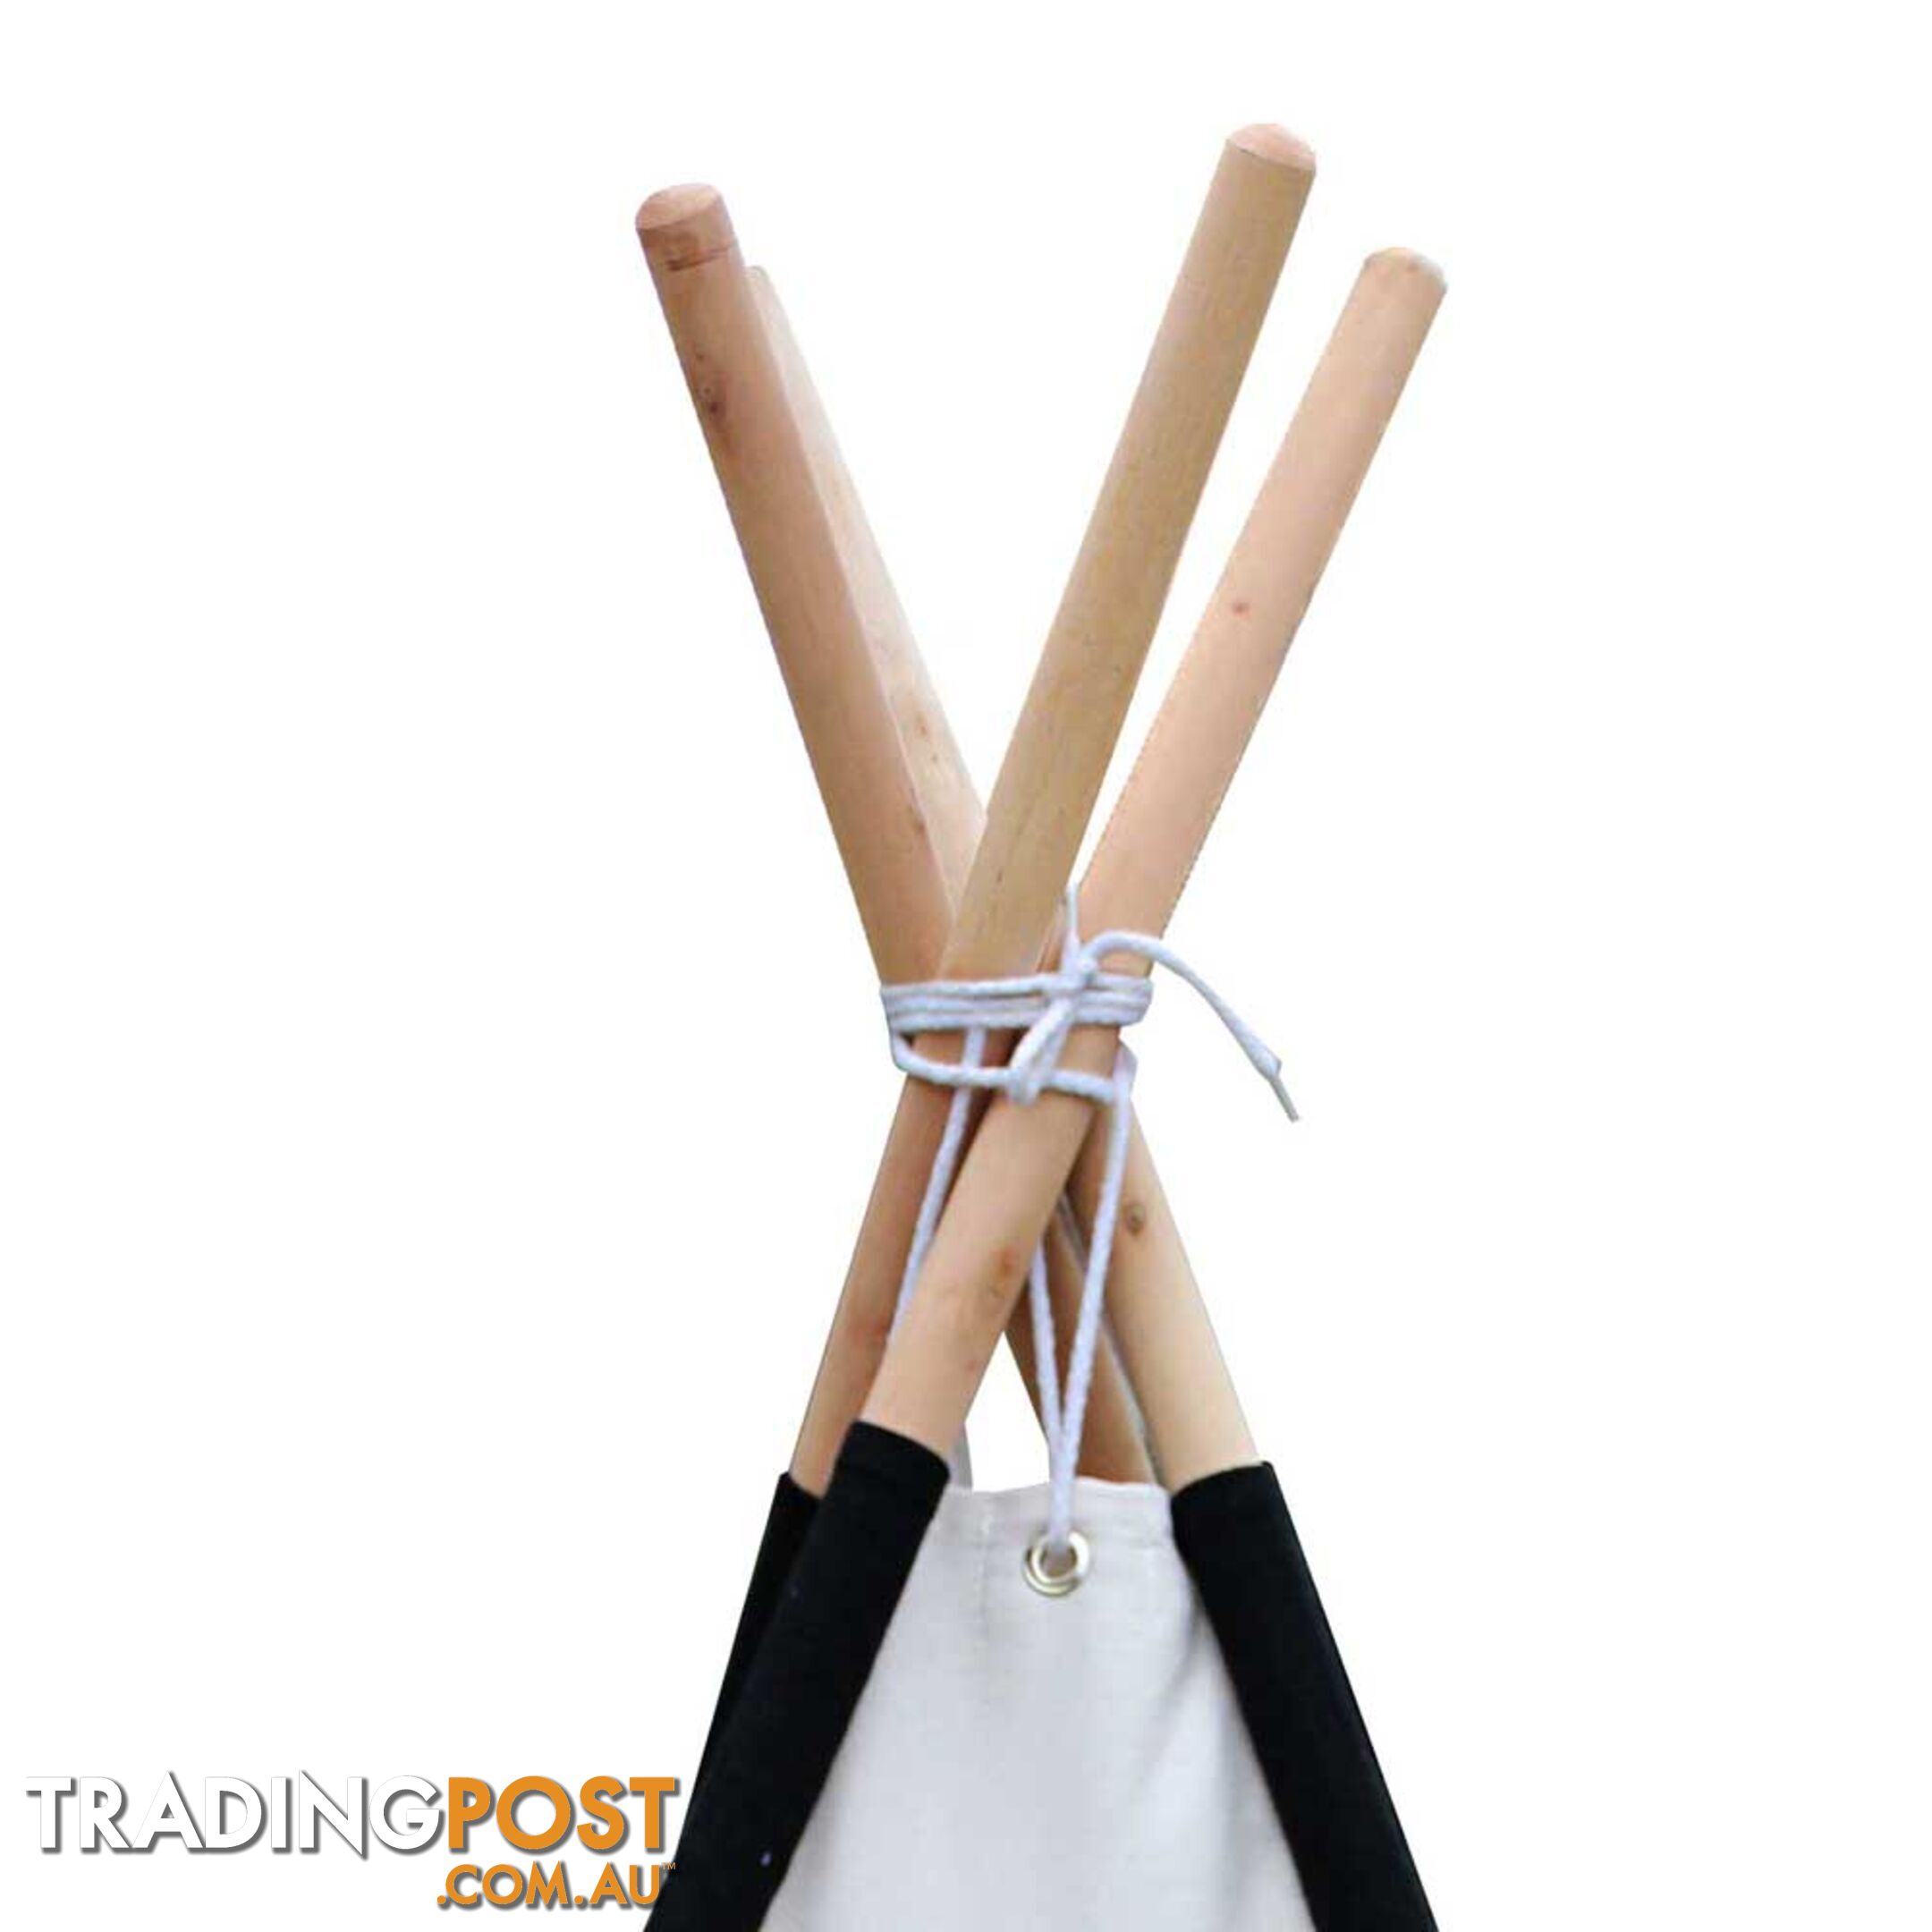 4 Poles Teepee Tent w/ Storage Bag Black